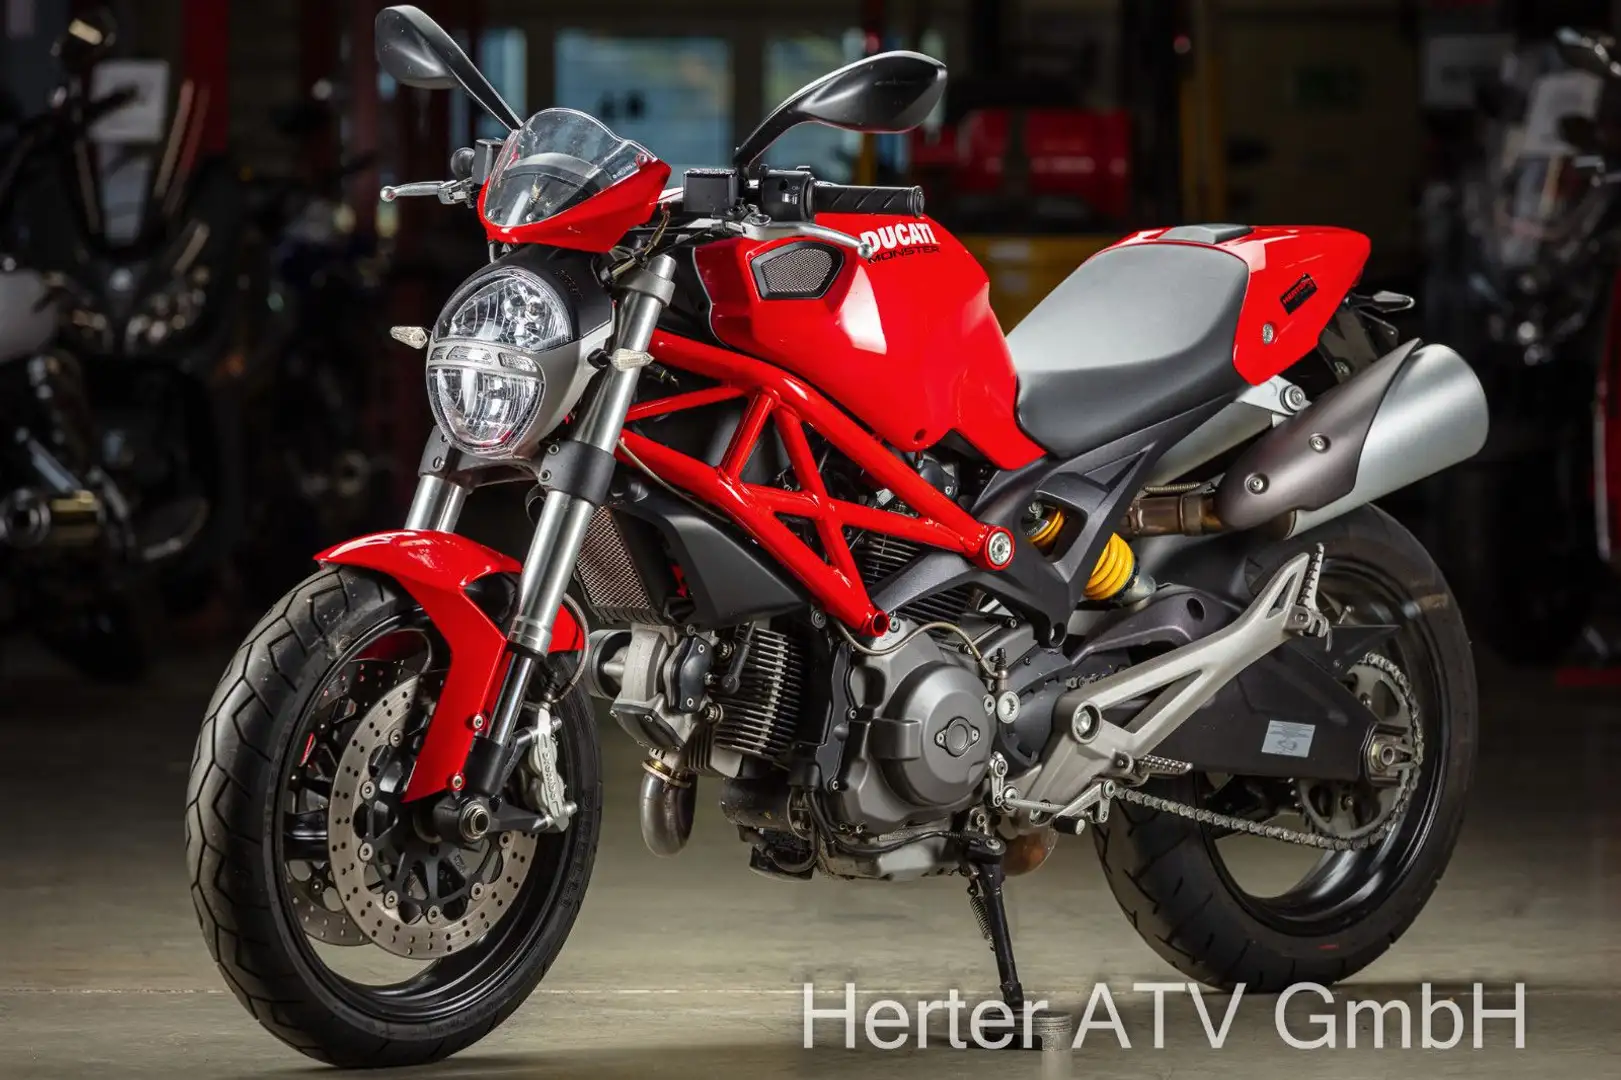 Ducati Monster 696 crvena - 2